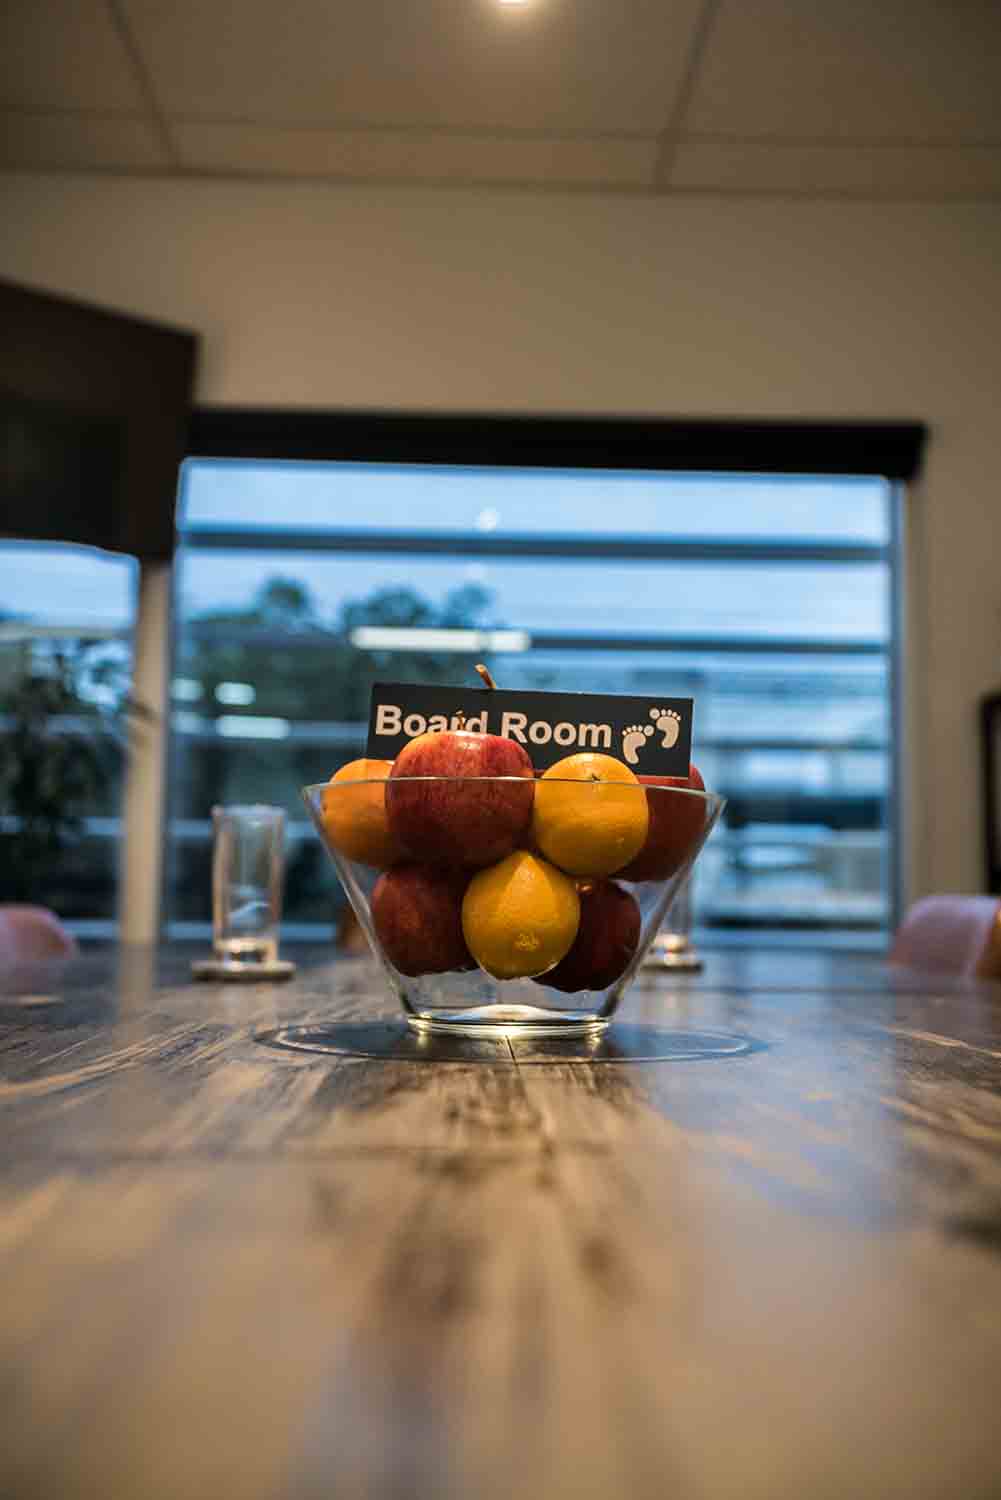 Boardroom Fruit Bowl